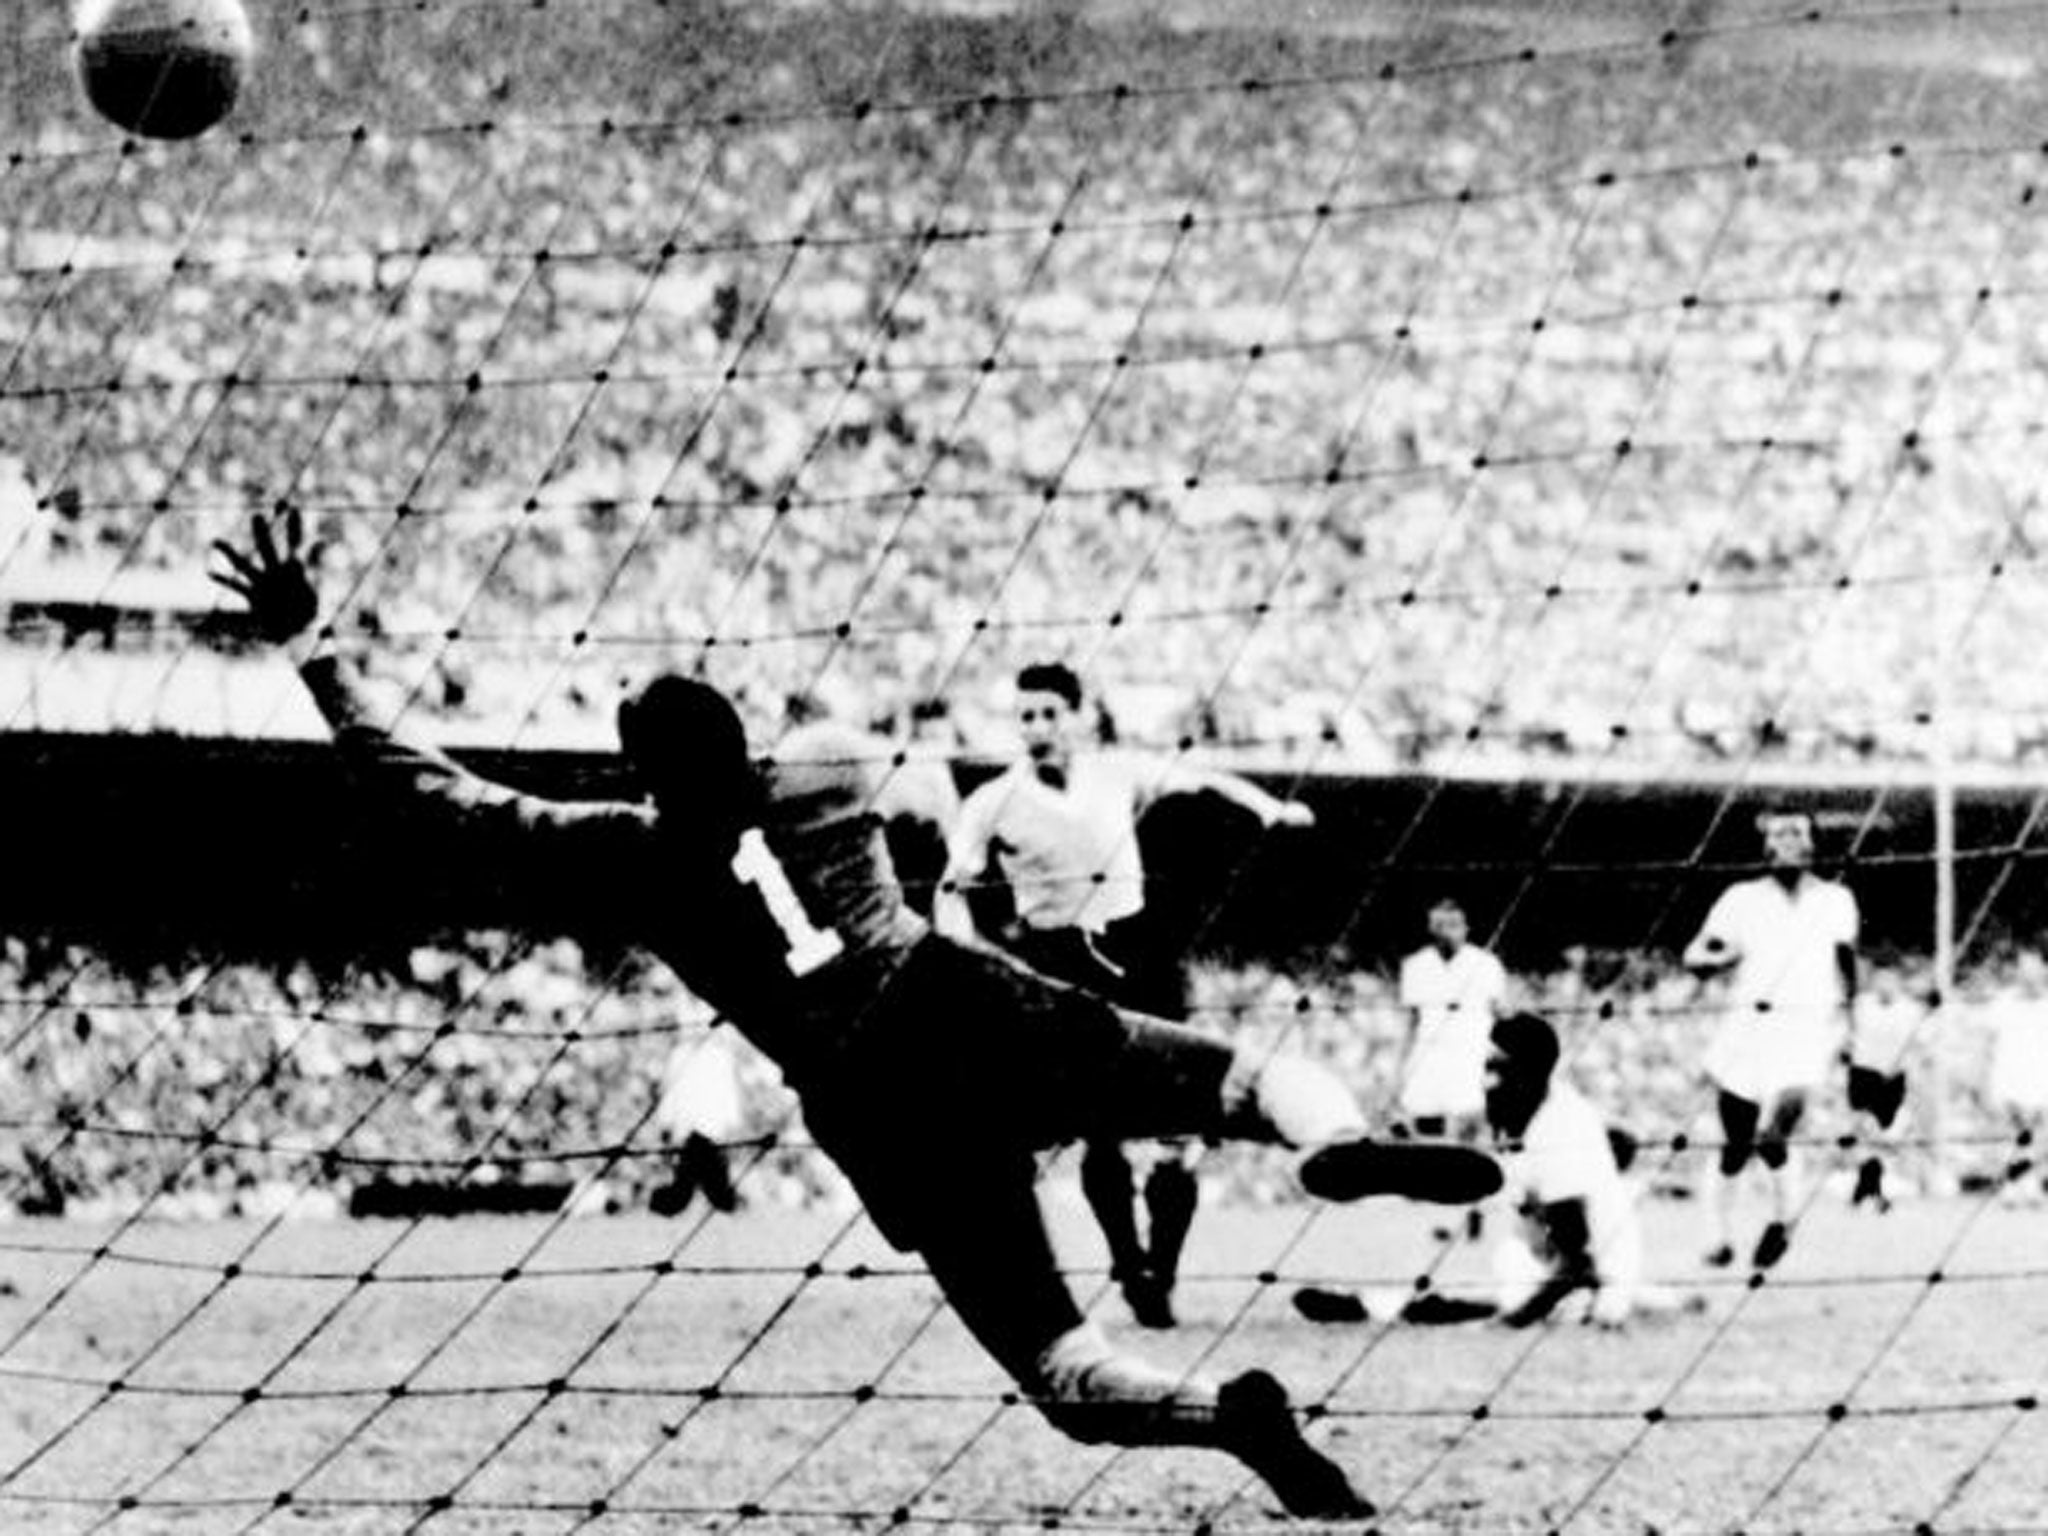 Uruguay striker Juan Alberto Schiaffino scores past Brazil’s goalkeeper Barbosa to make it 1-1 in the 1950 World Cup final in the Maracana